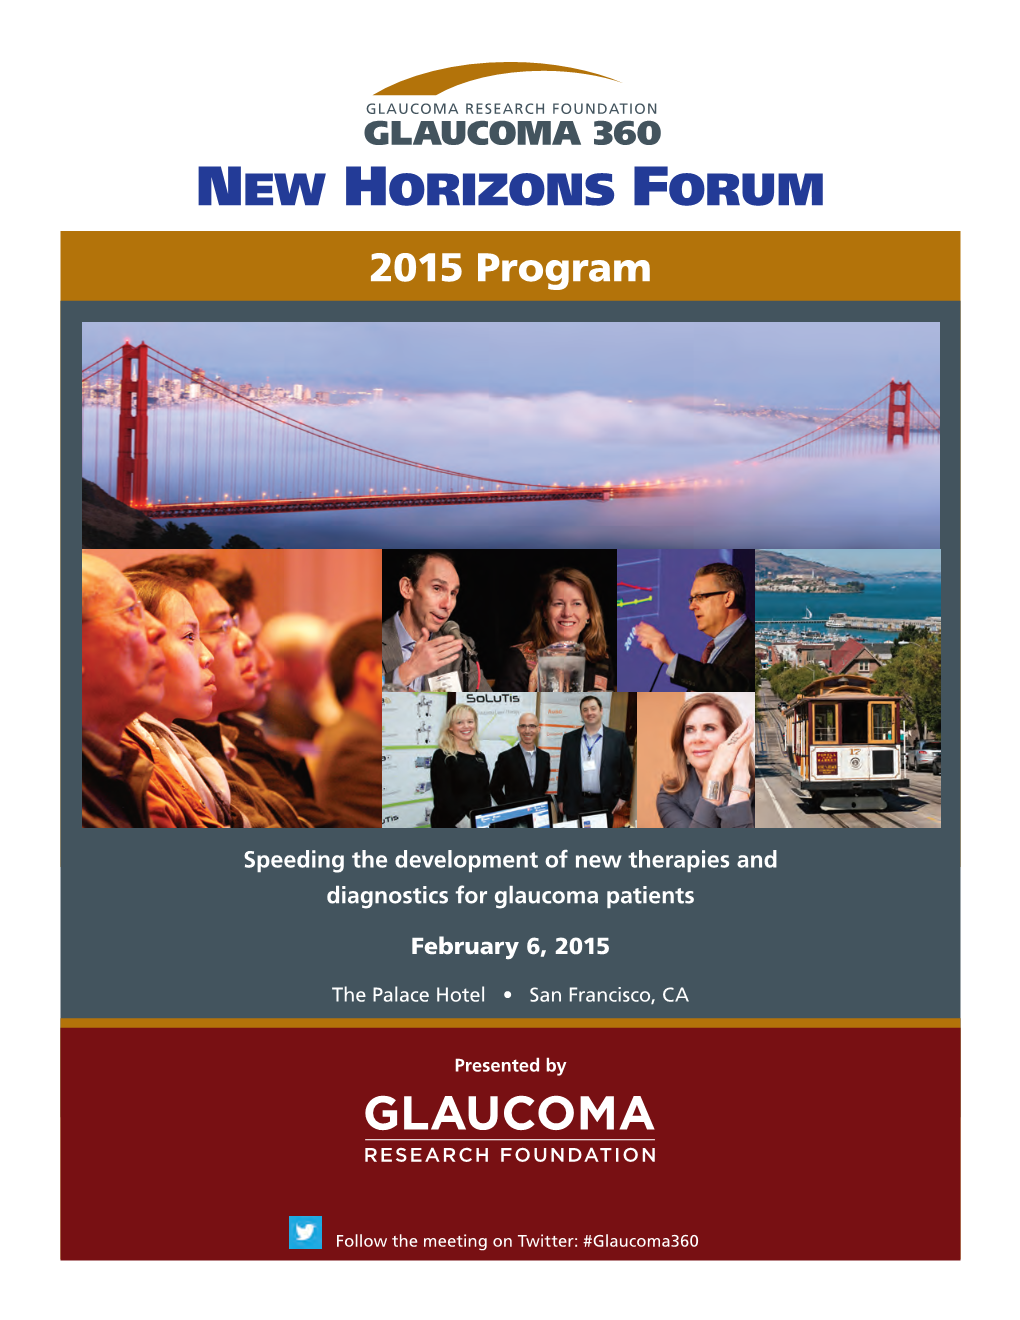 NEW HORIZONS FORUM 2015 Program